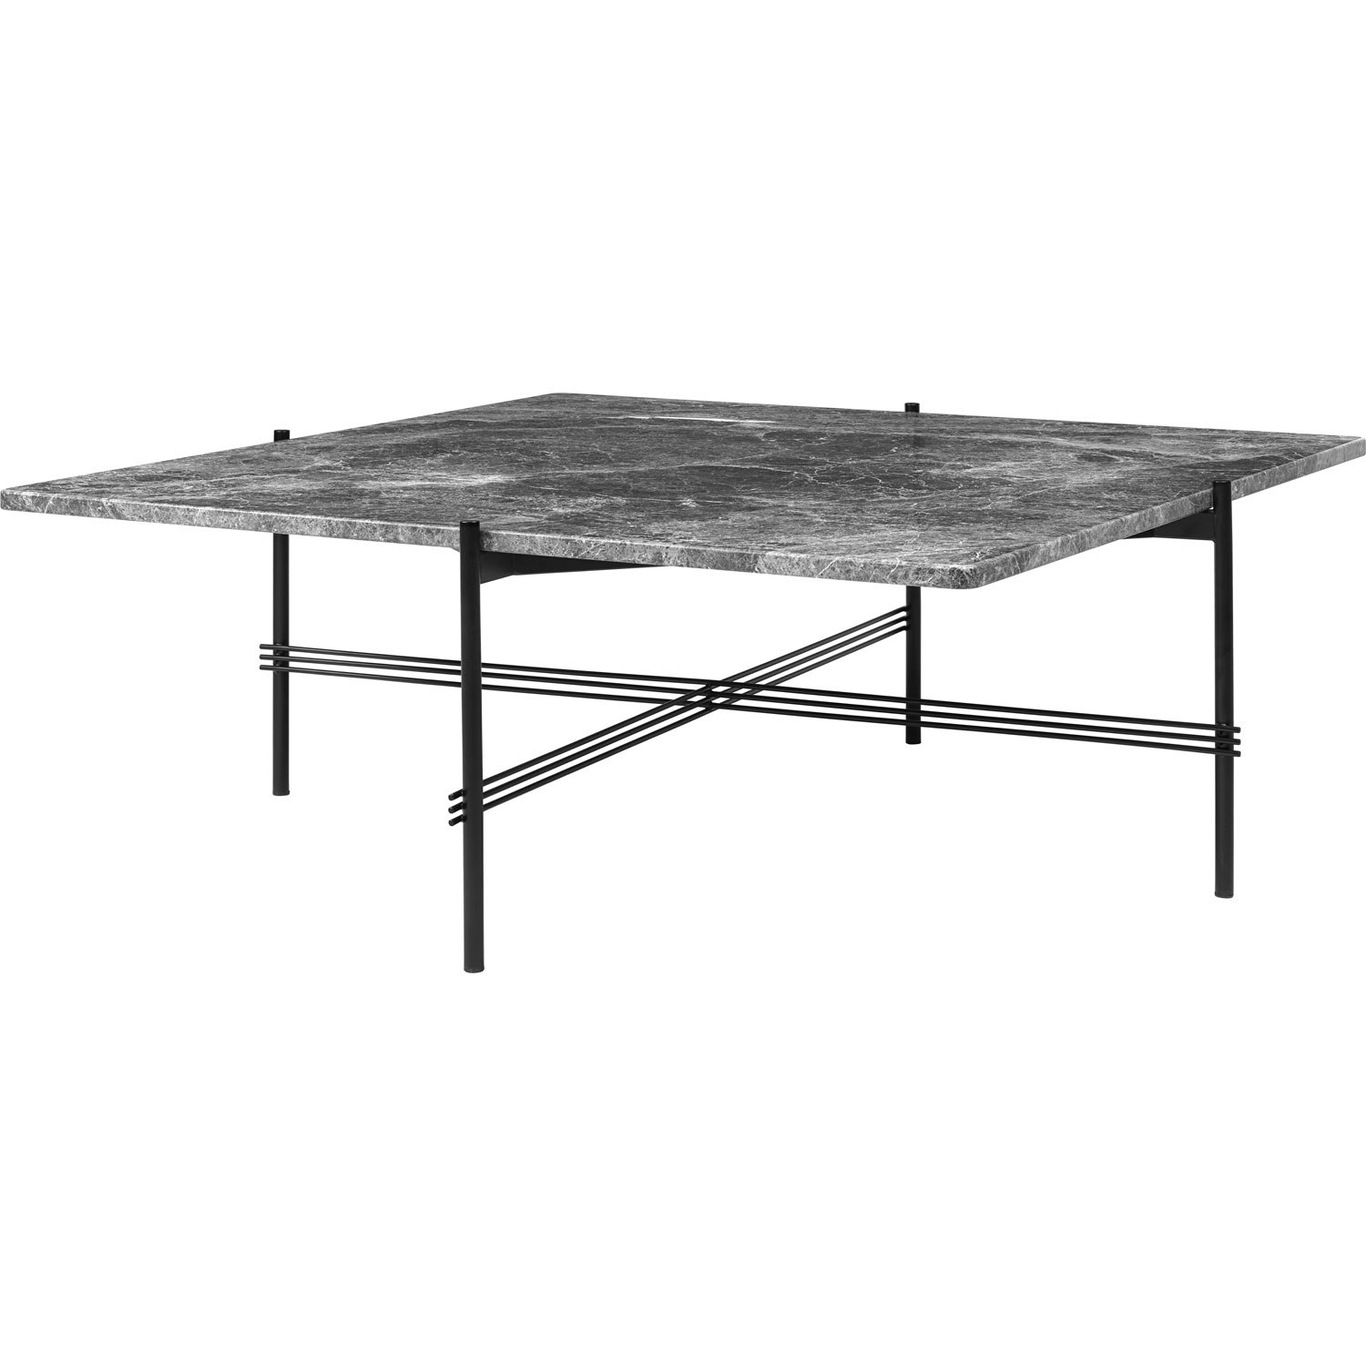 TS Coffee Table 105x105 cm, Black / Grey Marble